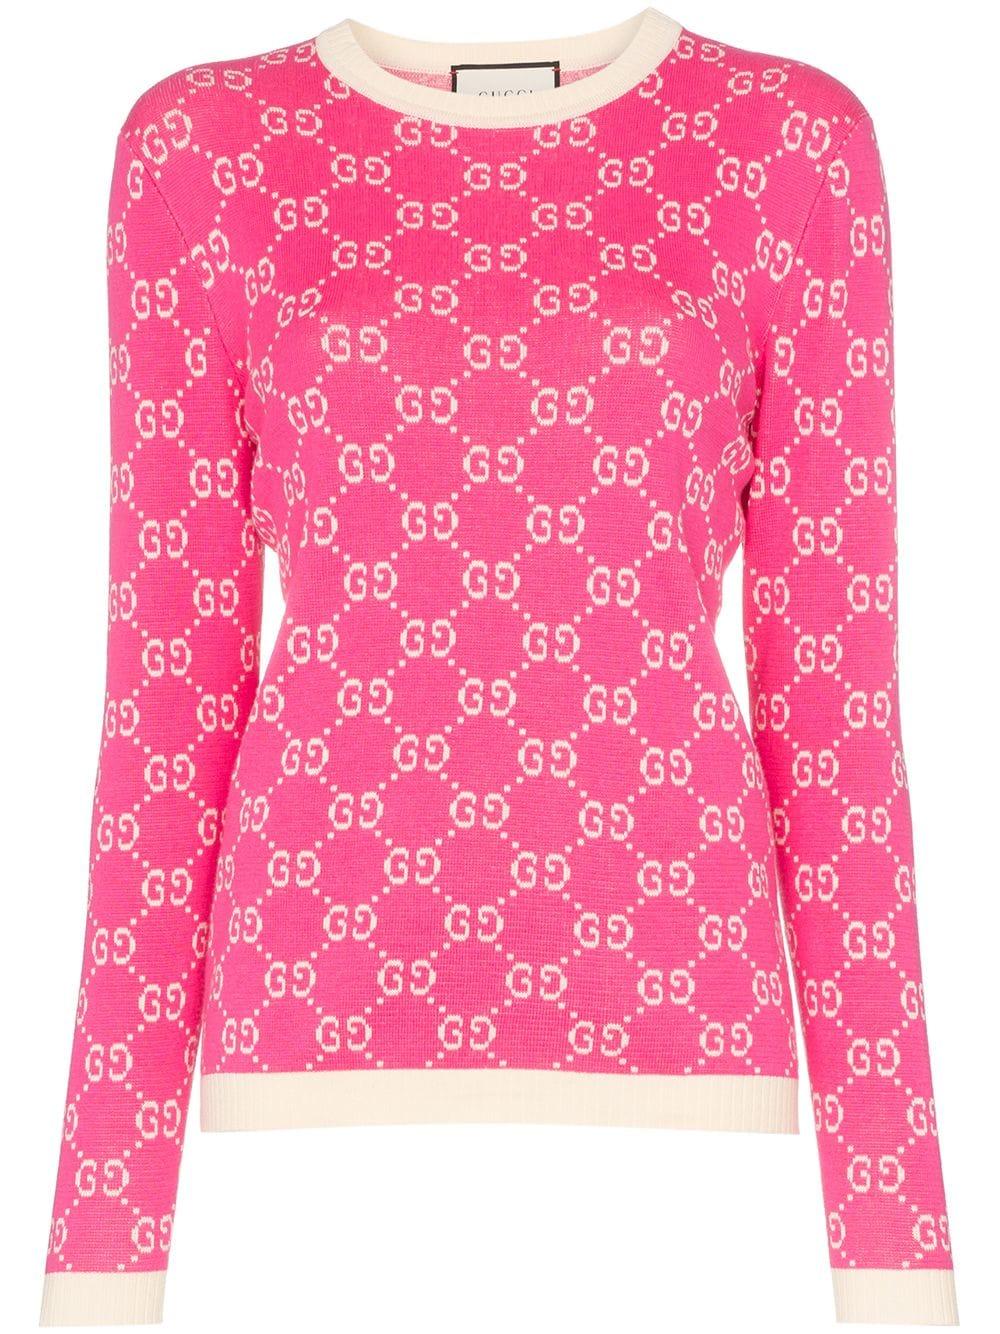 Gucci GG Logo Intarsia Cotton Jumper in Pink - Lyst